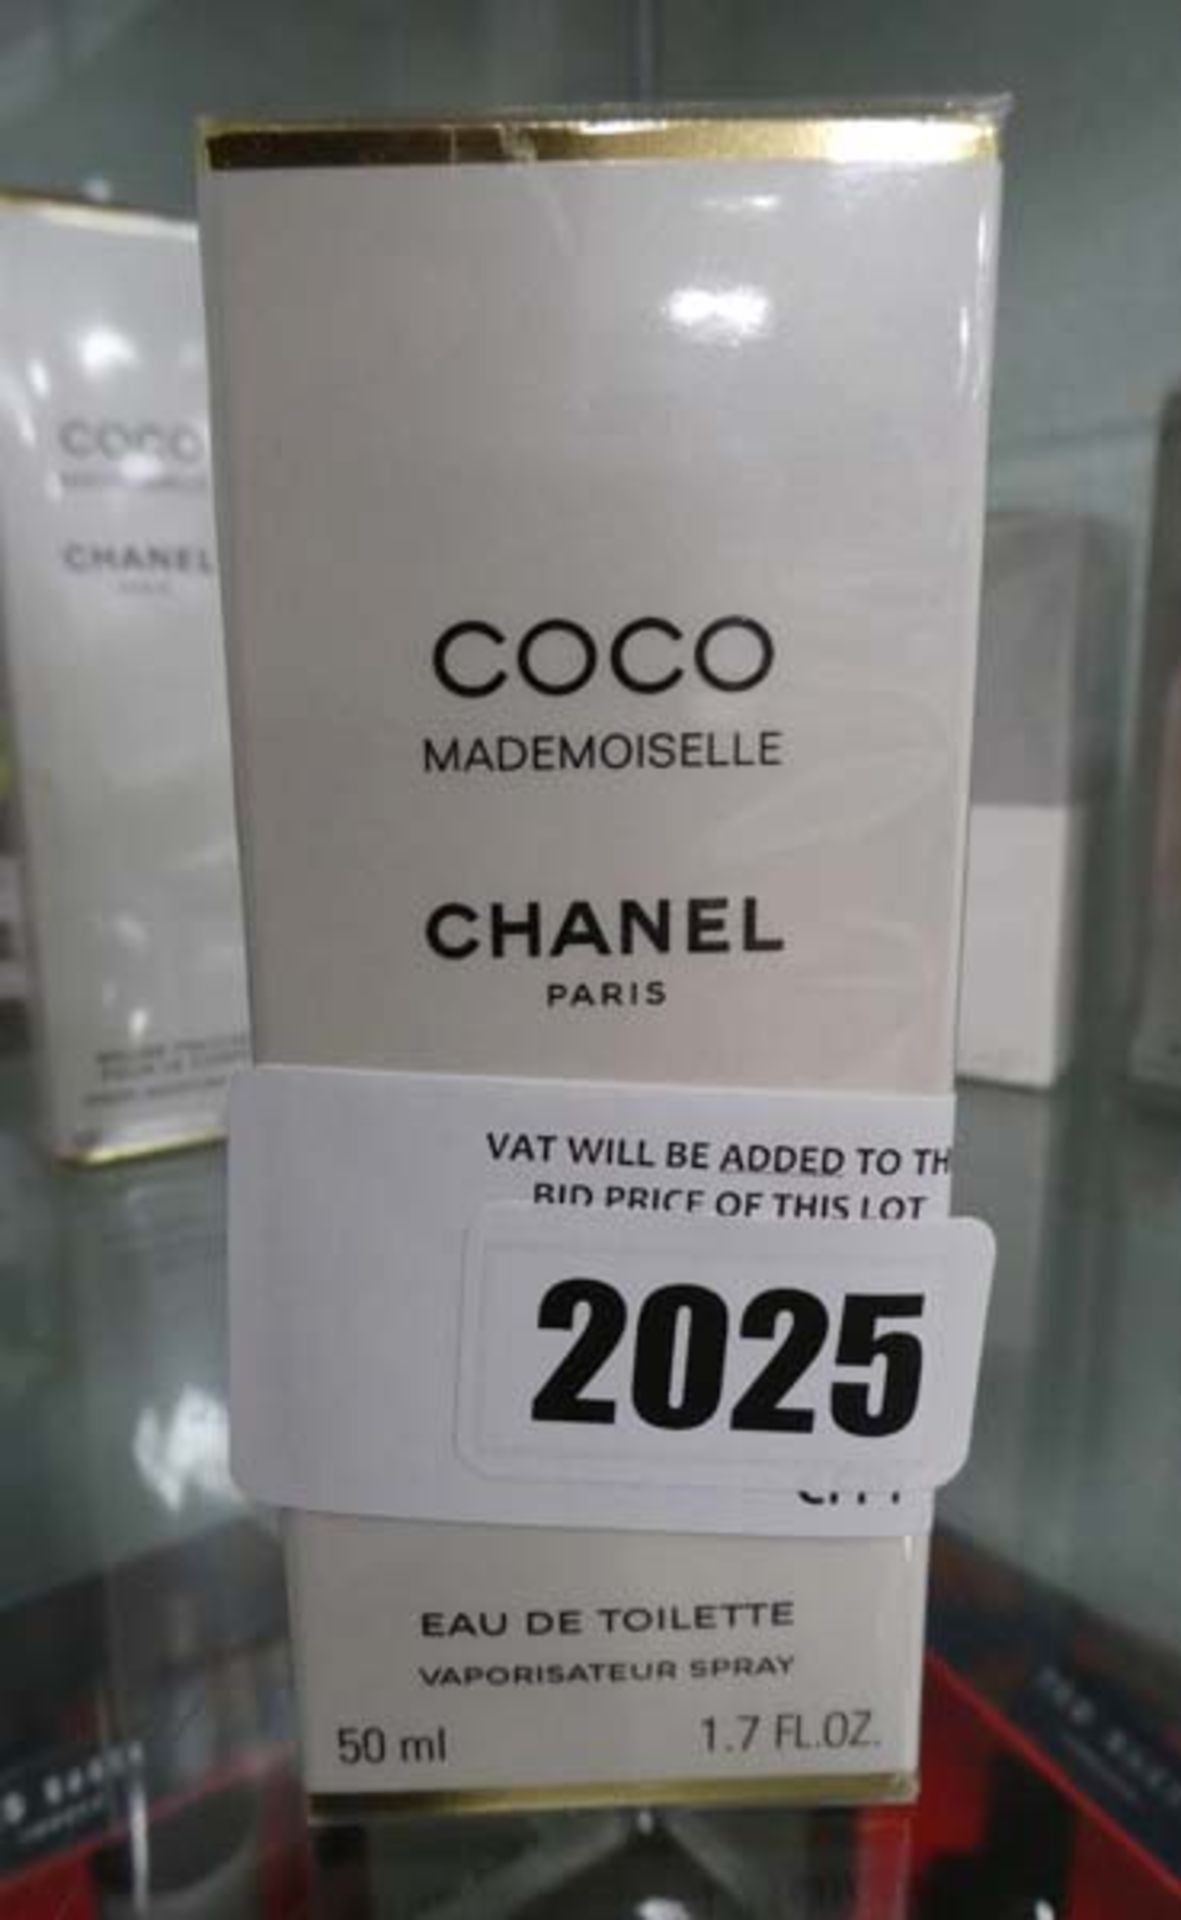 Coco Mademoiselle Chanel Paris 50ml perfume in sealed box